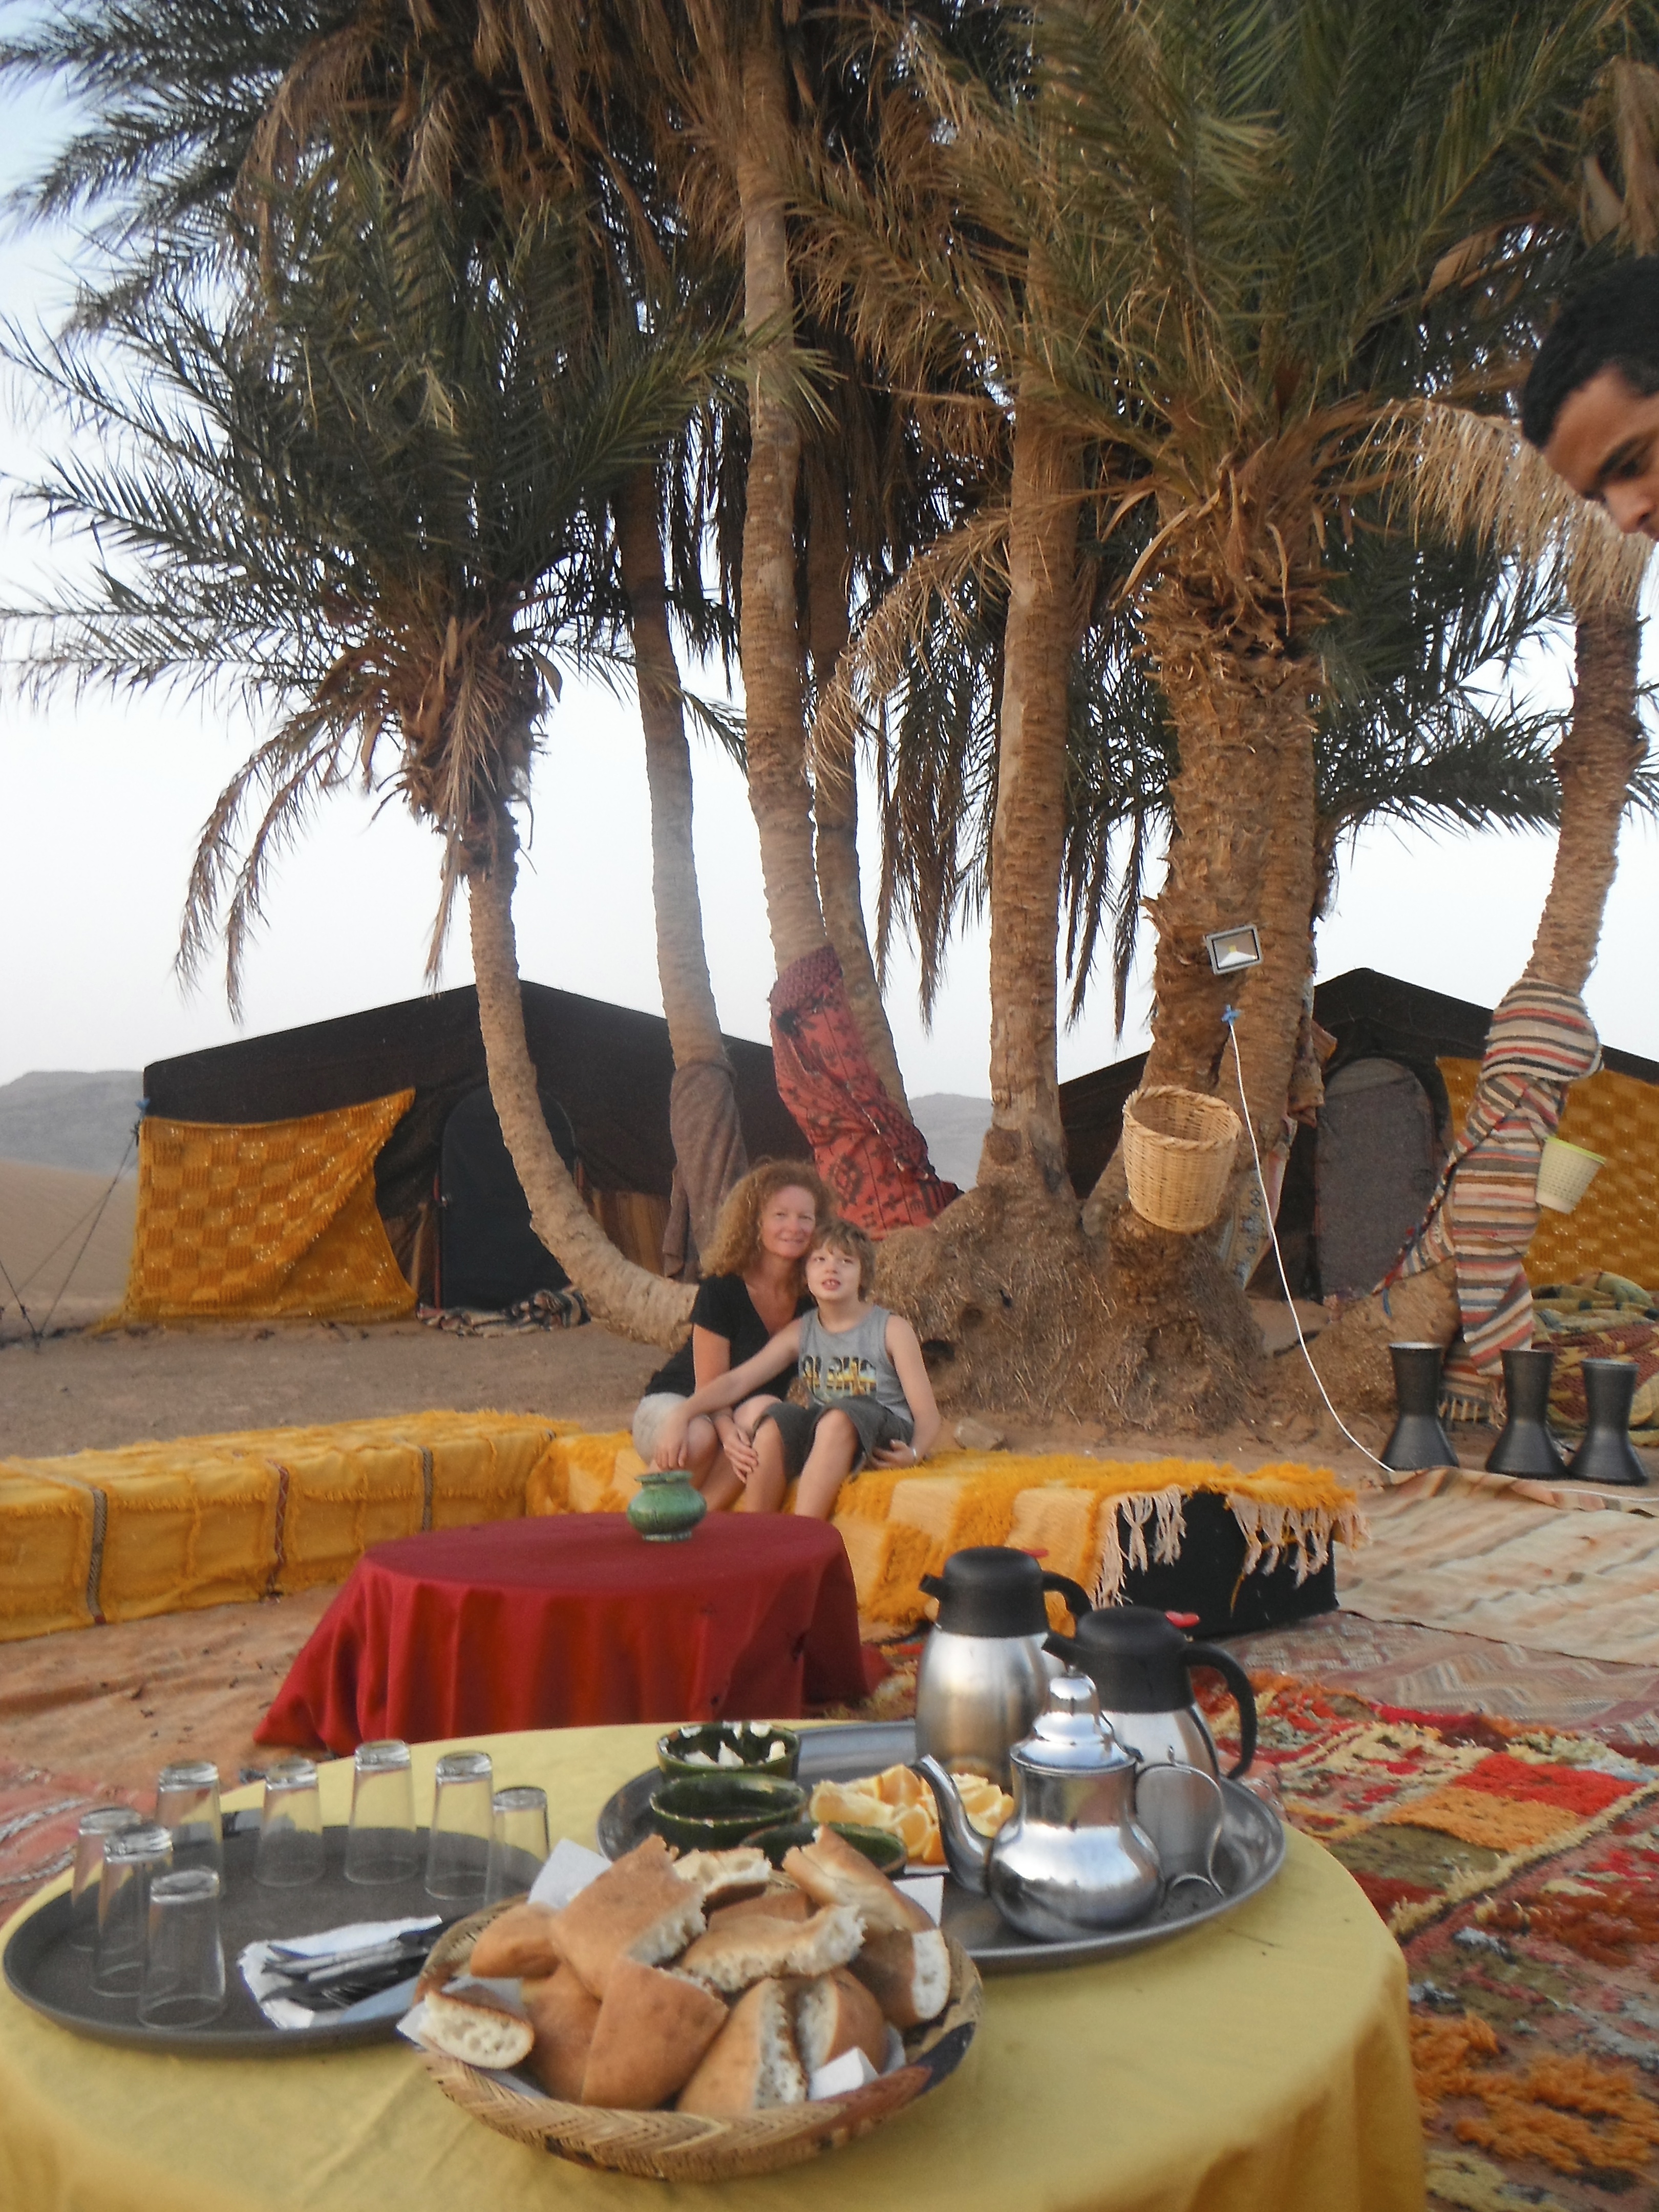 ©Exploramum and Explorason - Moroccan desert after sleeping under the stars